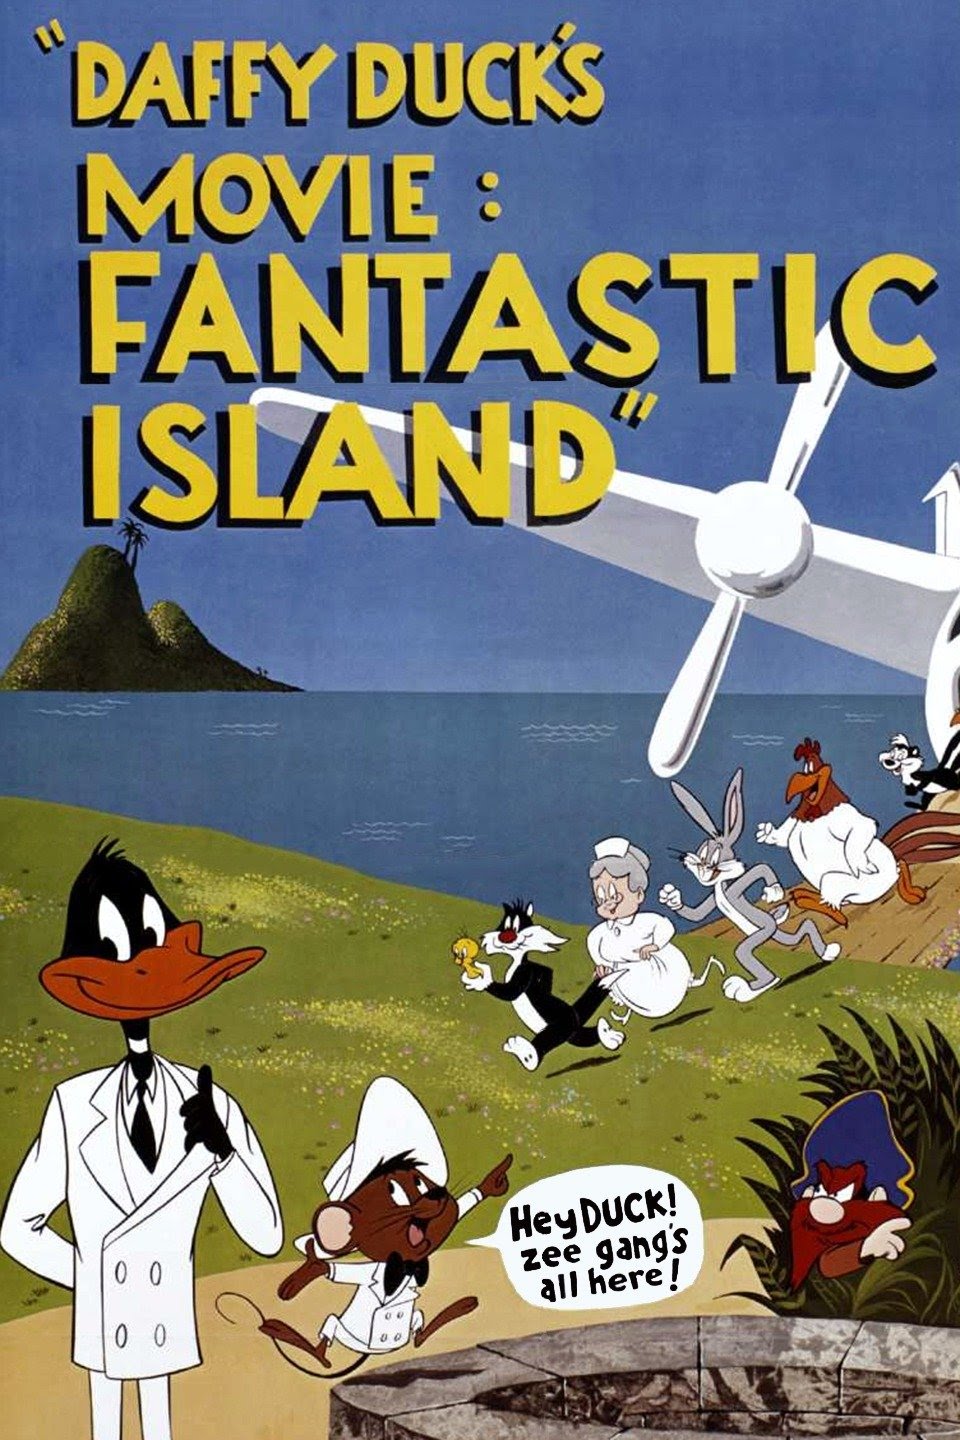 Daffy Ducks Fantastic Island Warner Bros picture